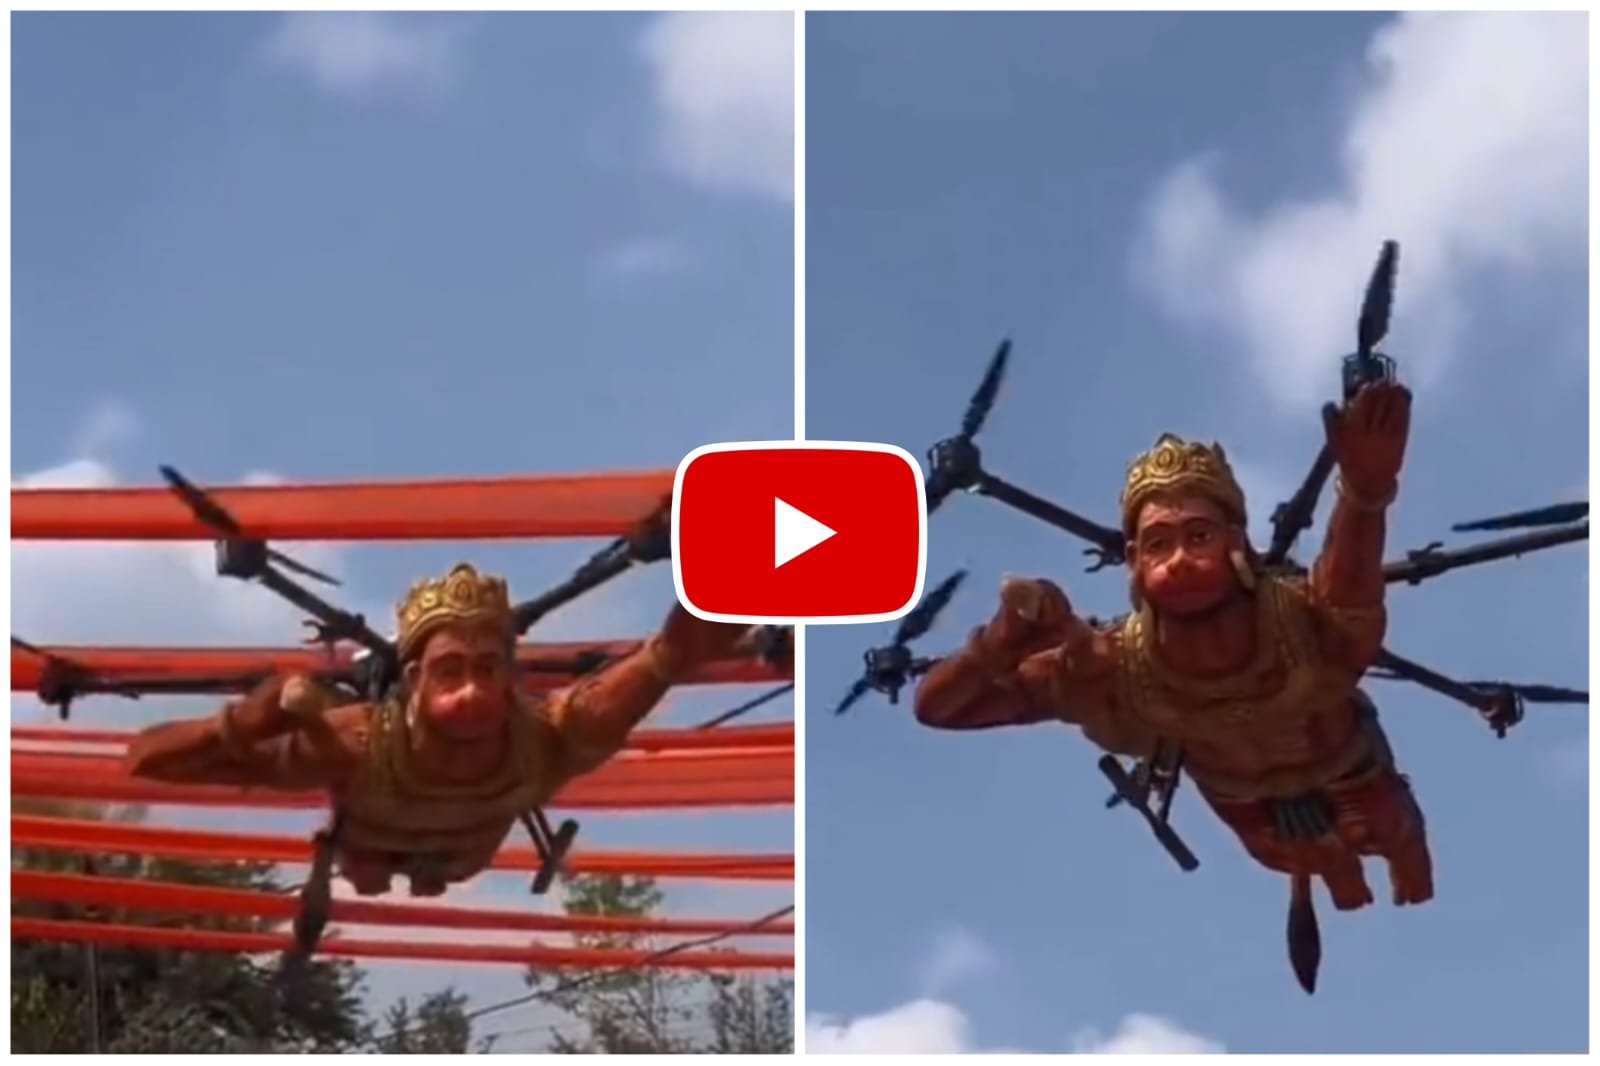 Hanuman Ji Ka Video - Hanuman Ji was seen flying in the sky